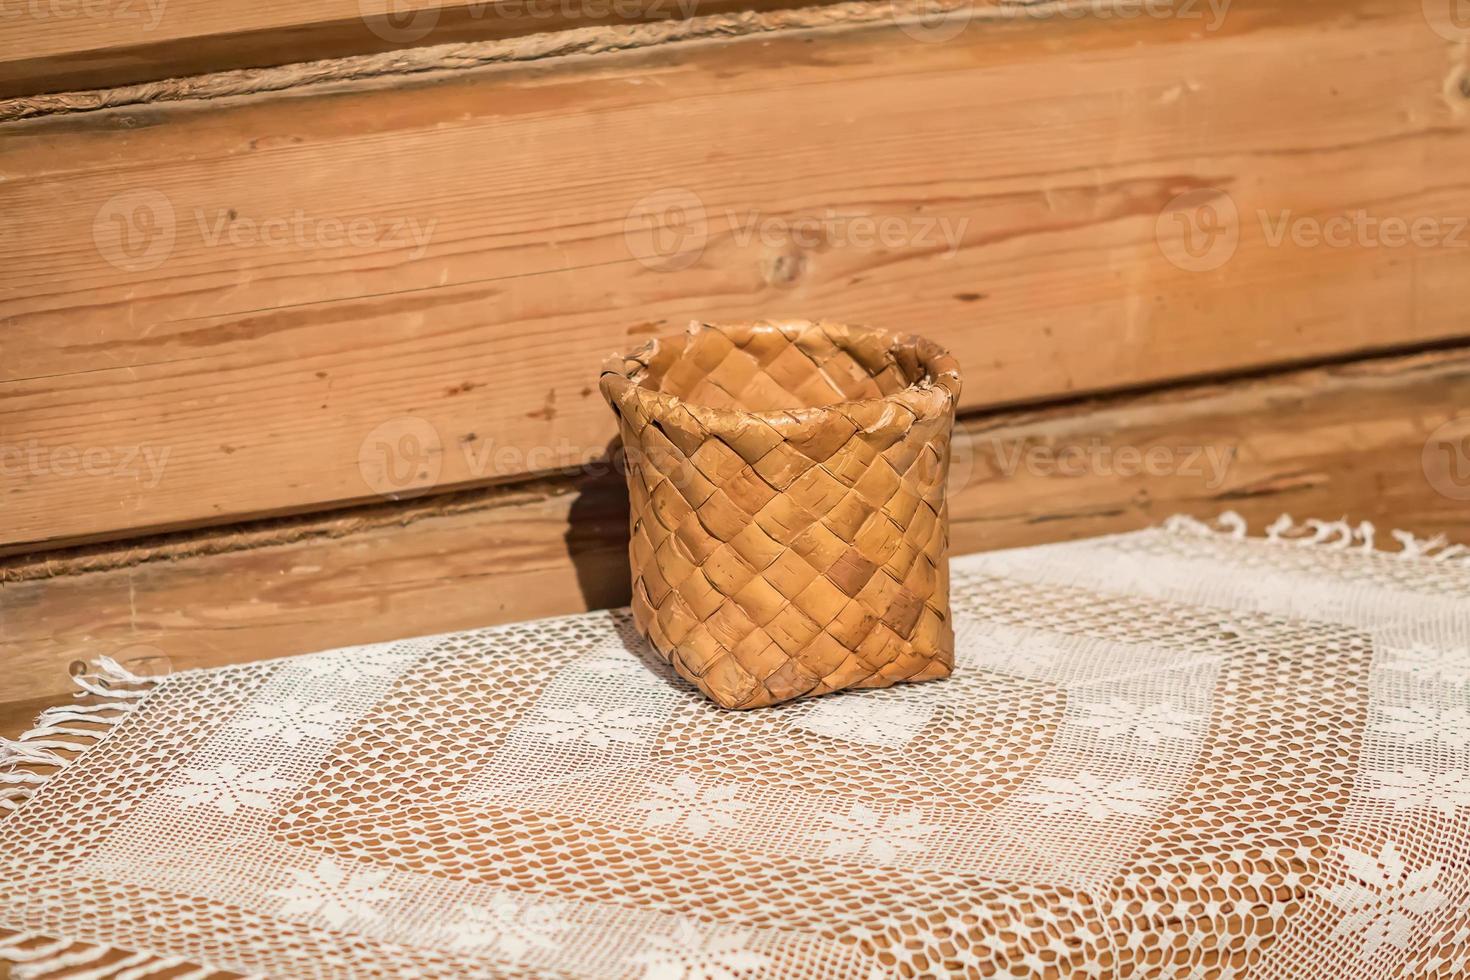 cesta de casca de bétula na toalha de mesa branca a céu aberto foto